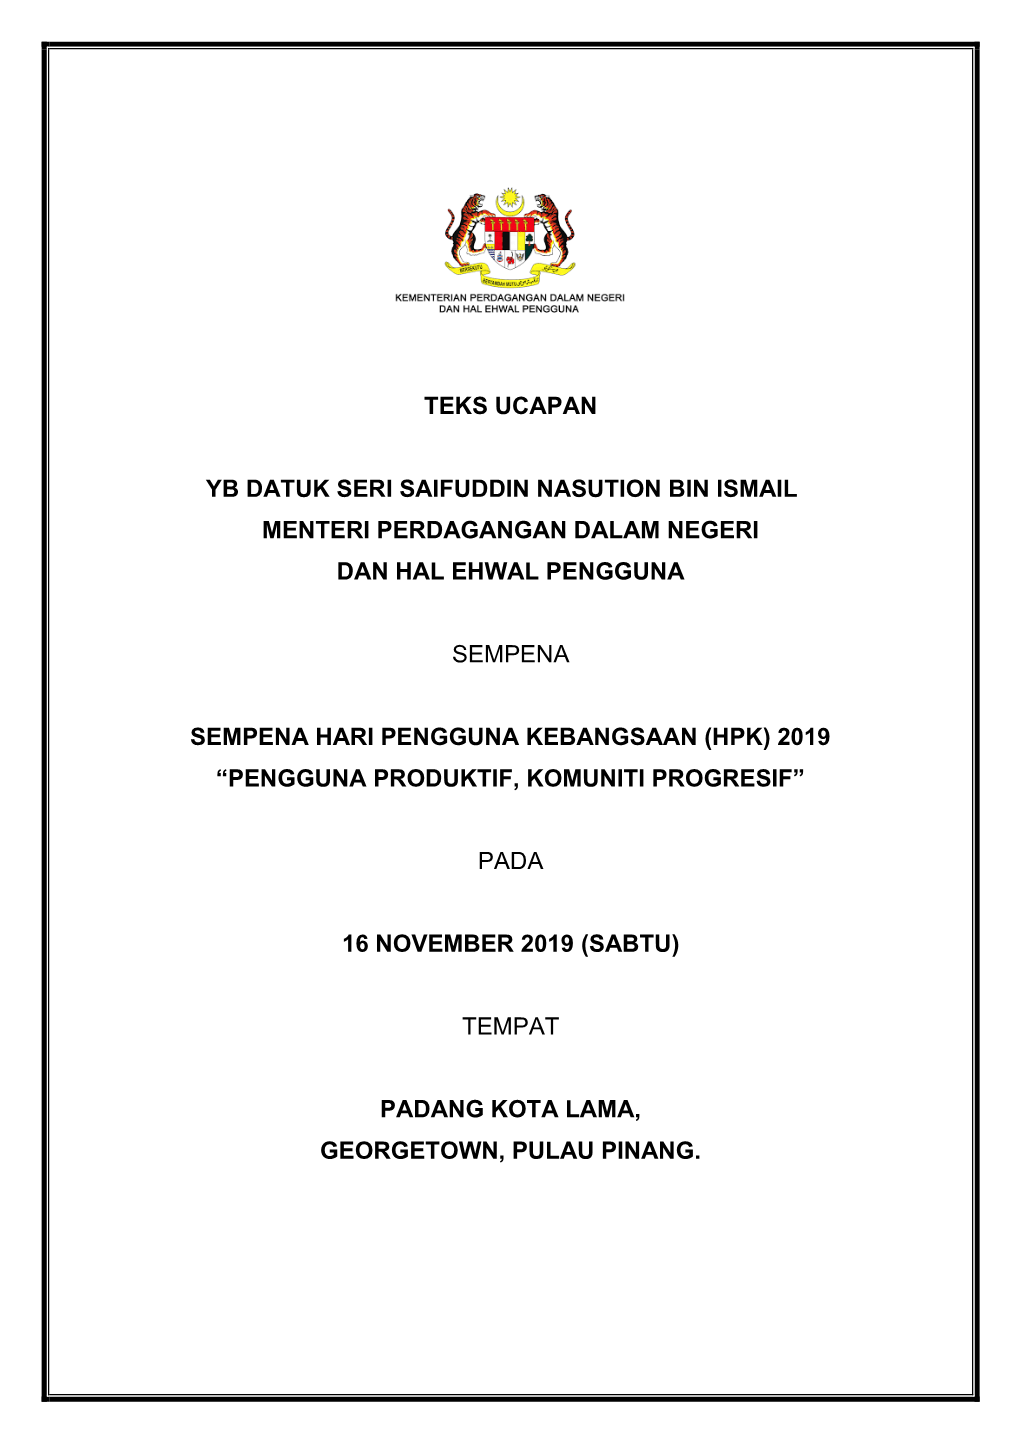 Teks Ucapan Yb Datuk Seri Saifuddin Nasution Bin Ismail